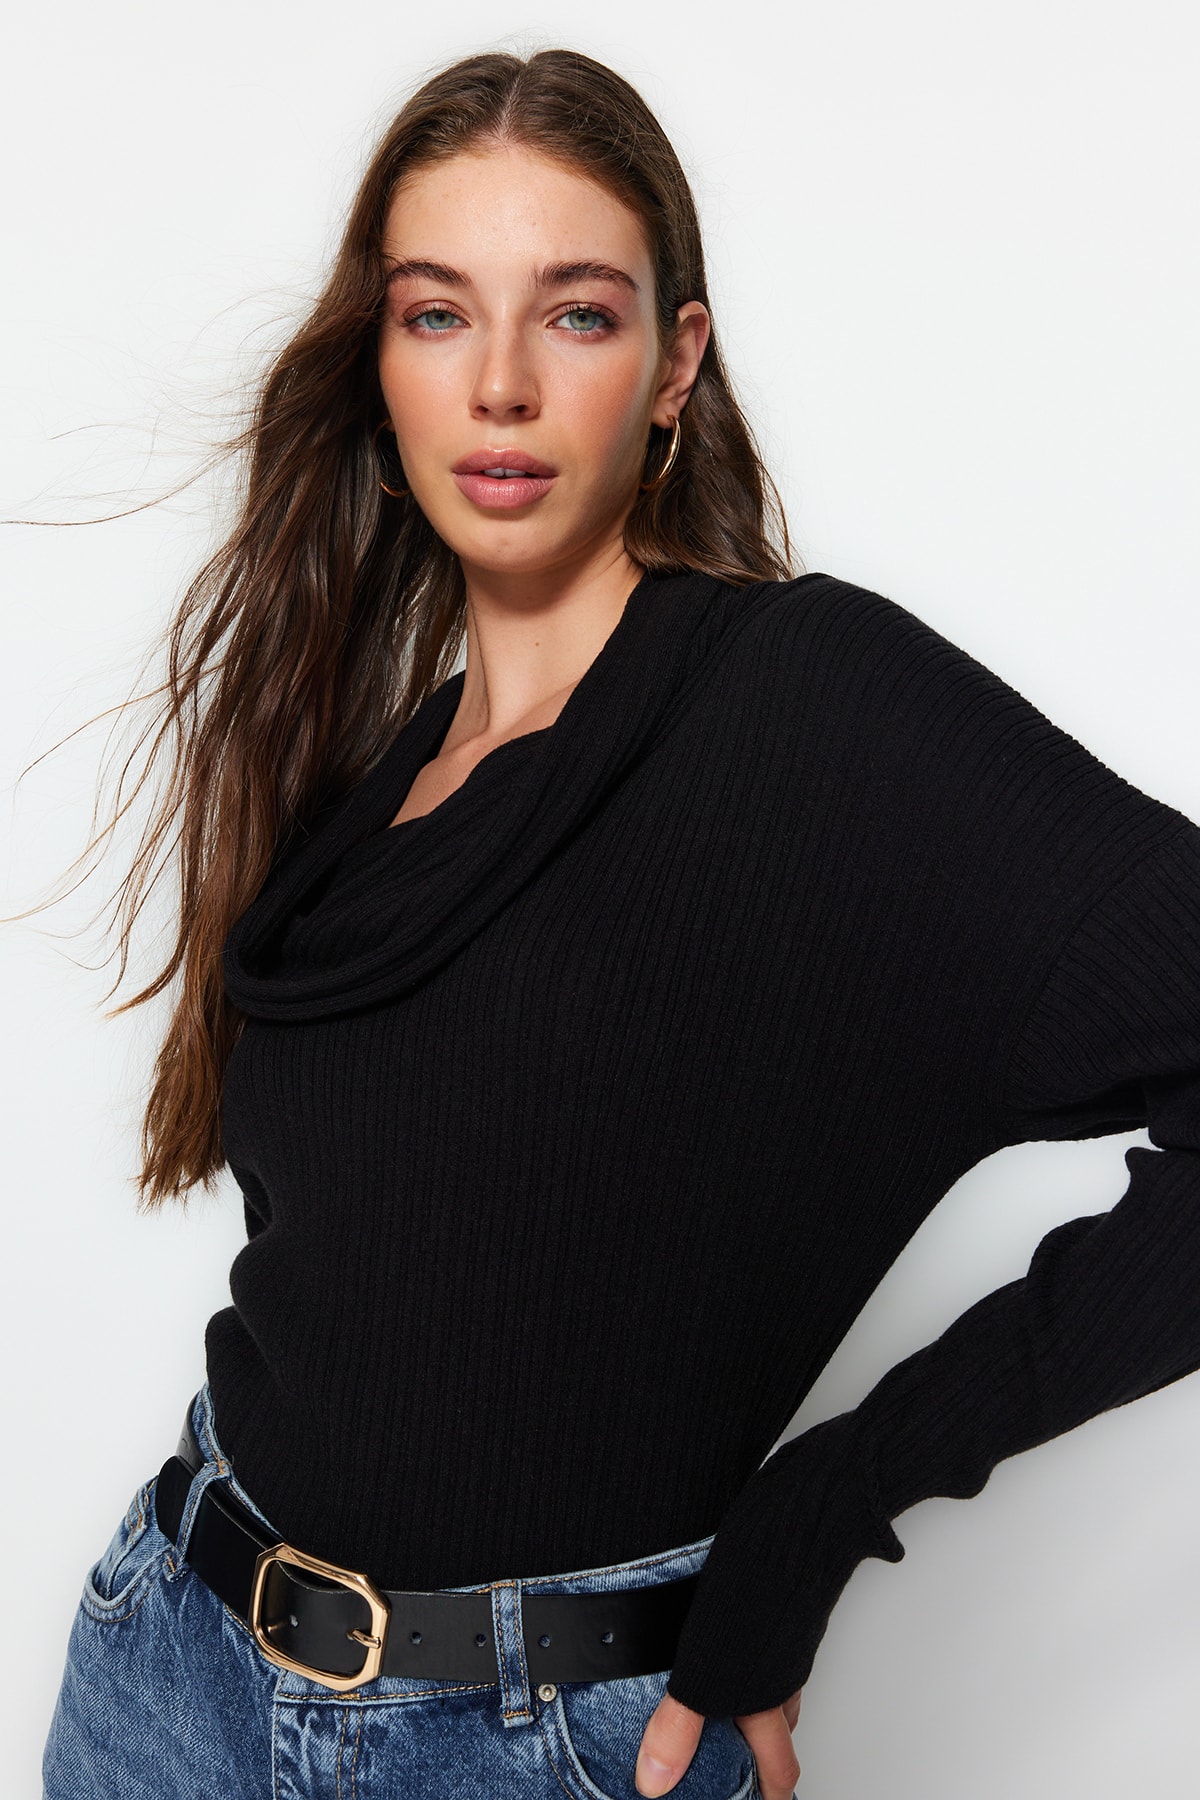 Trendyol Black Collar Detailed Premium Yarn / Special Yarn Knitwear Sweater